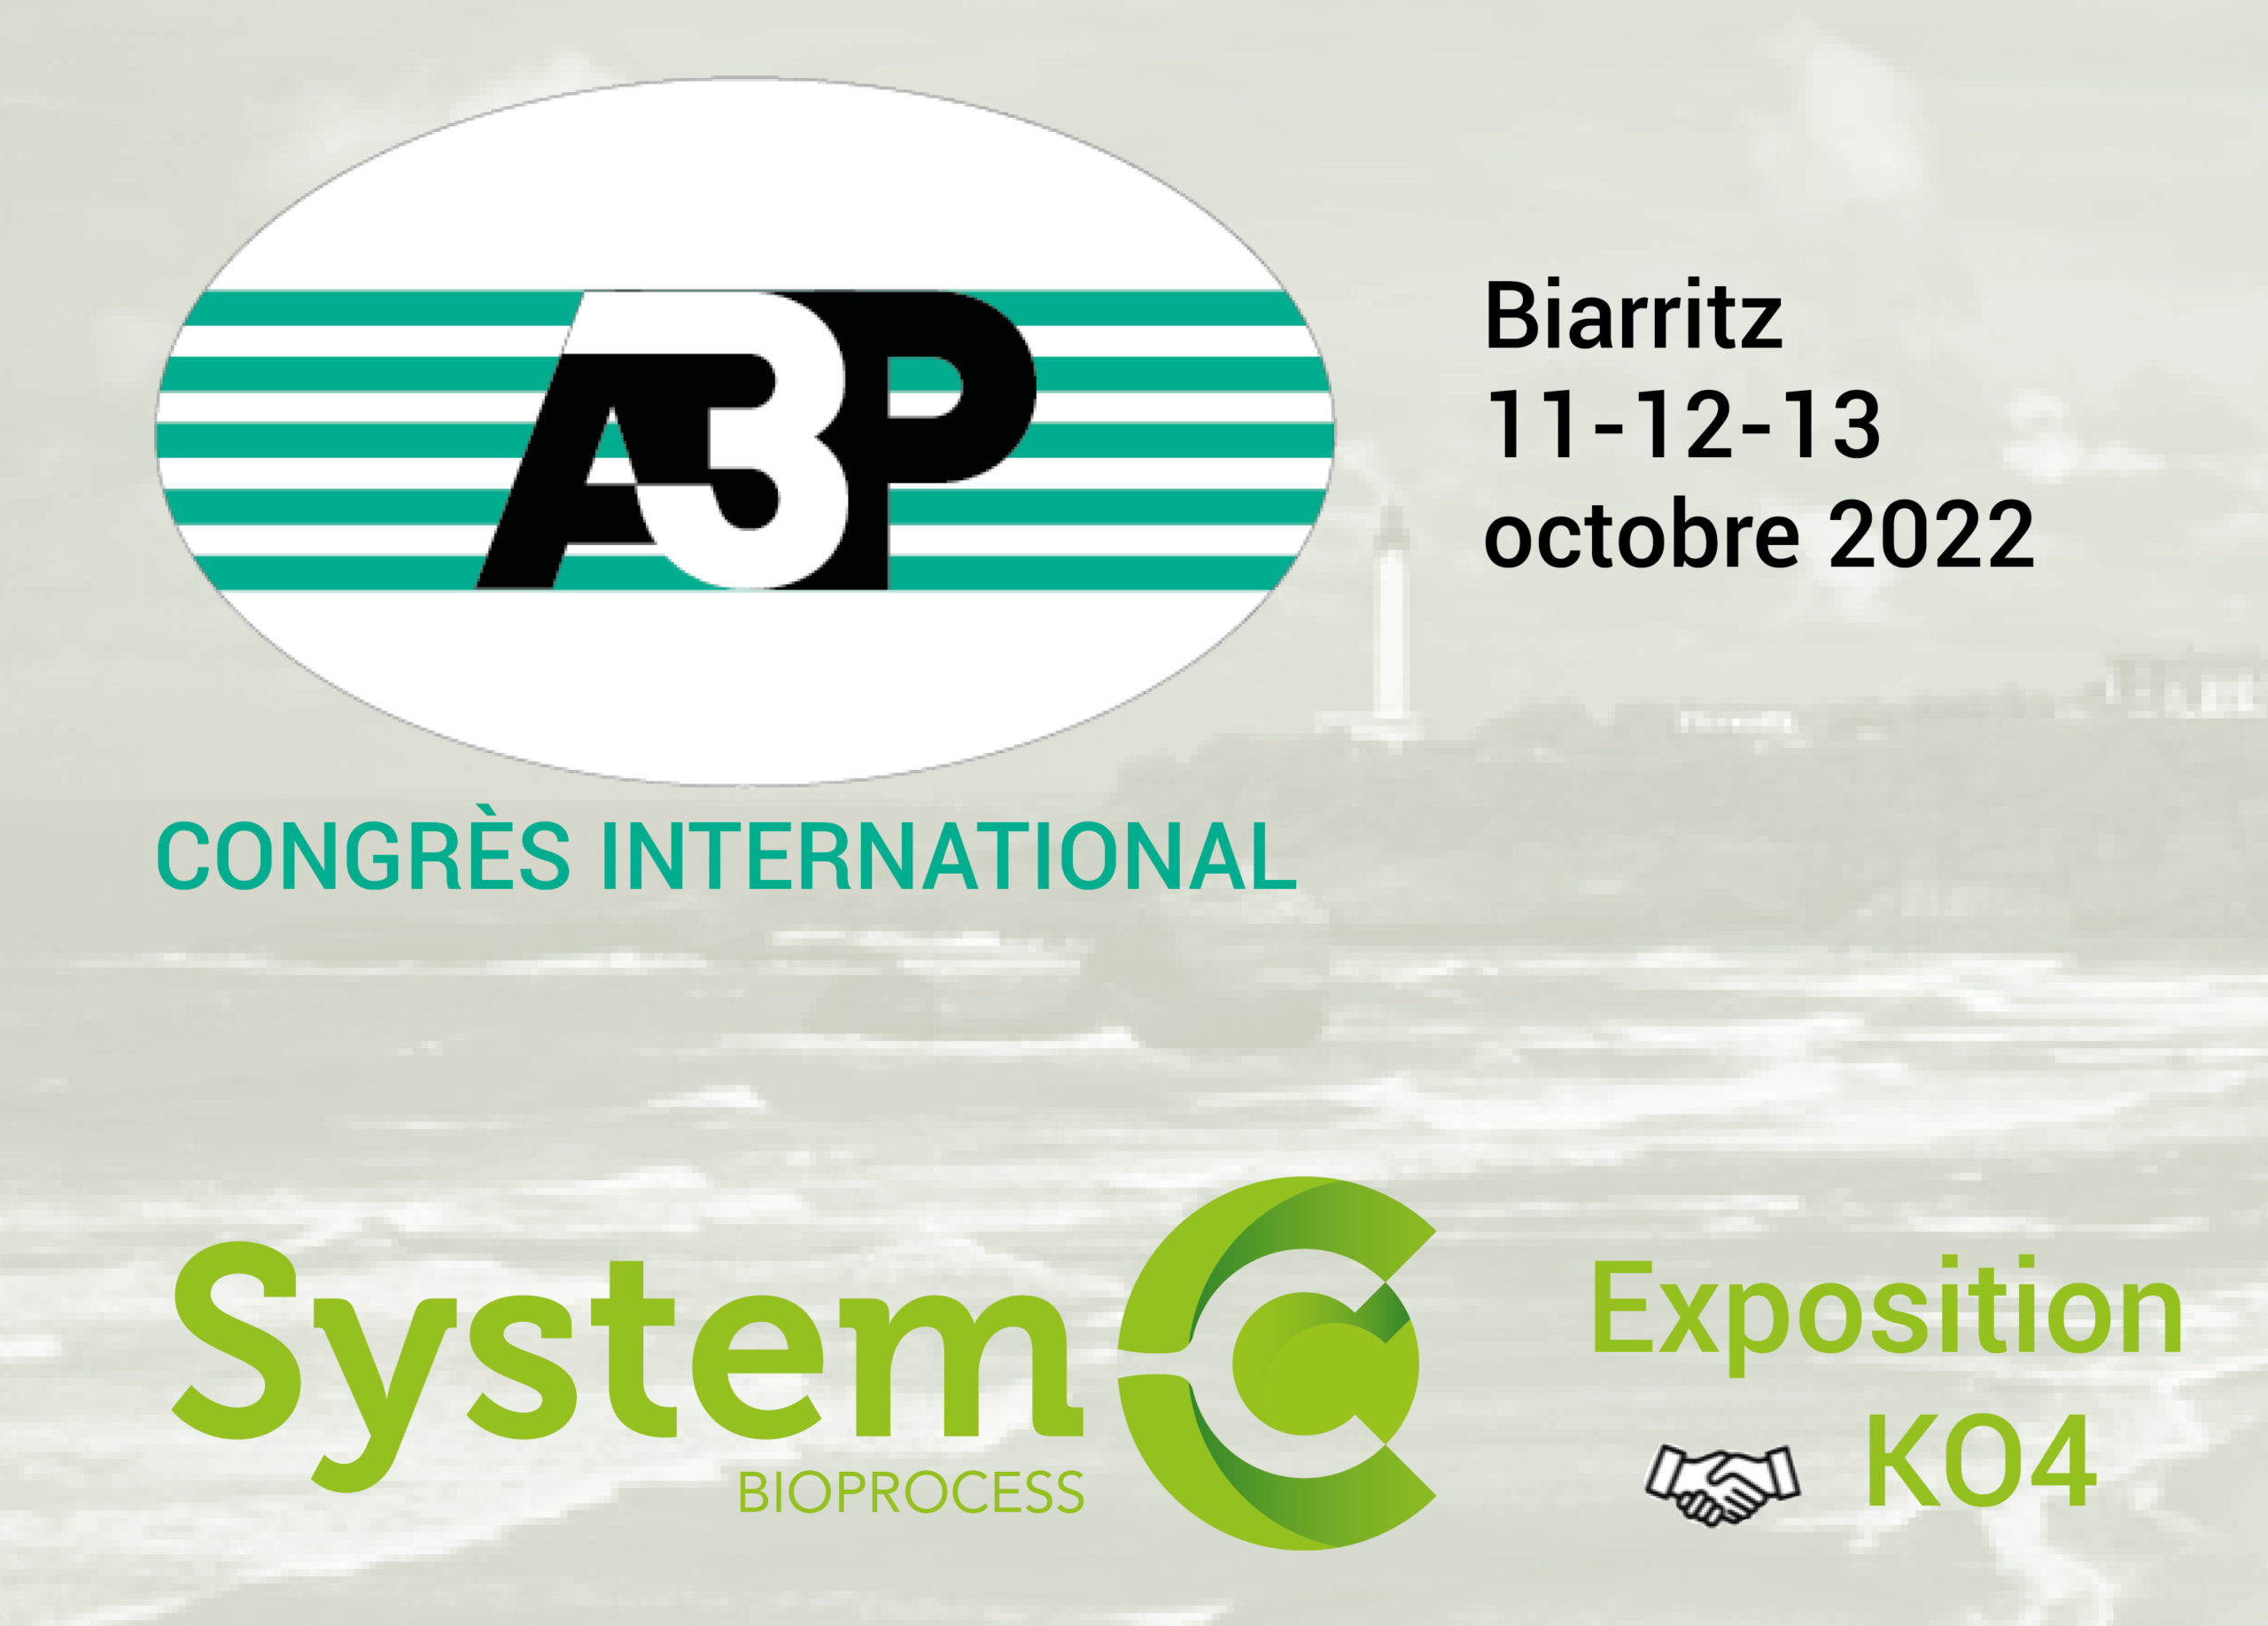 Congrès international A3P Biarritz 2022 - System-c bioprocess